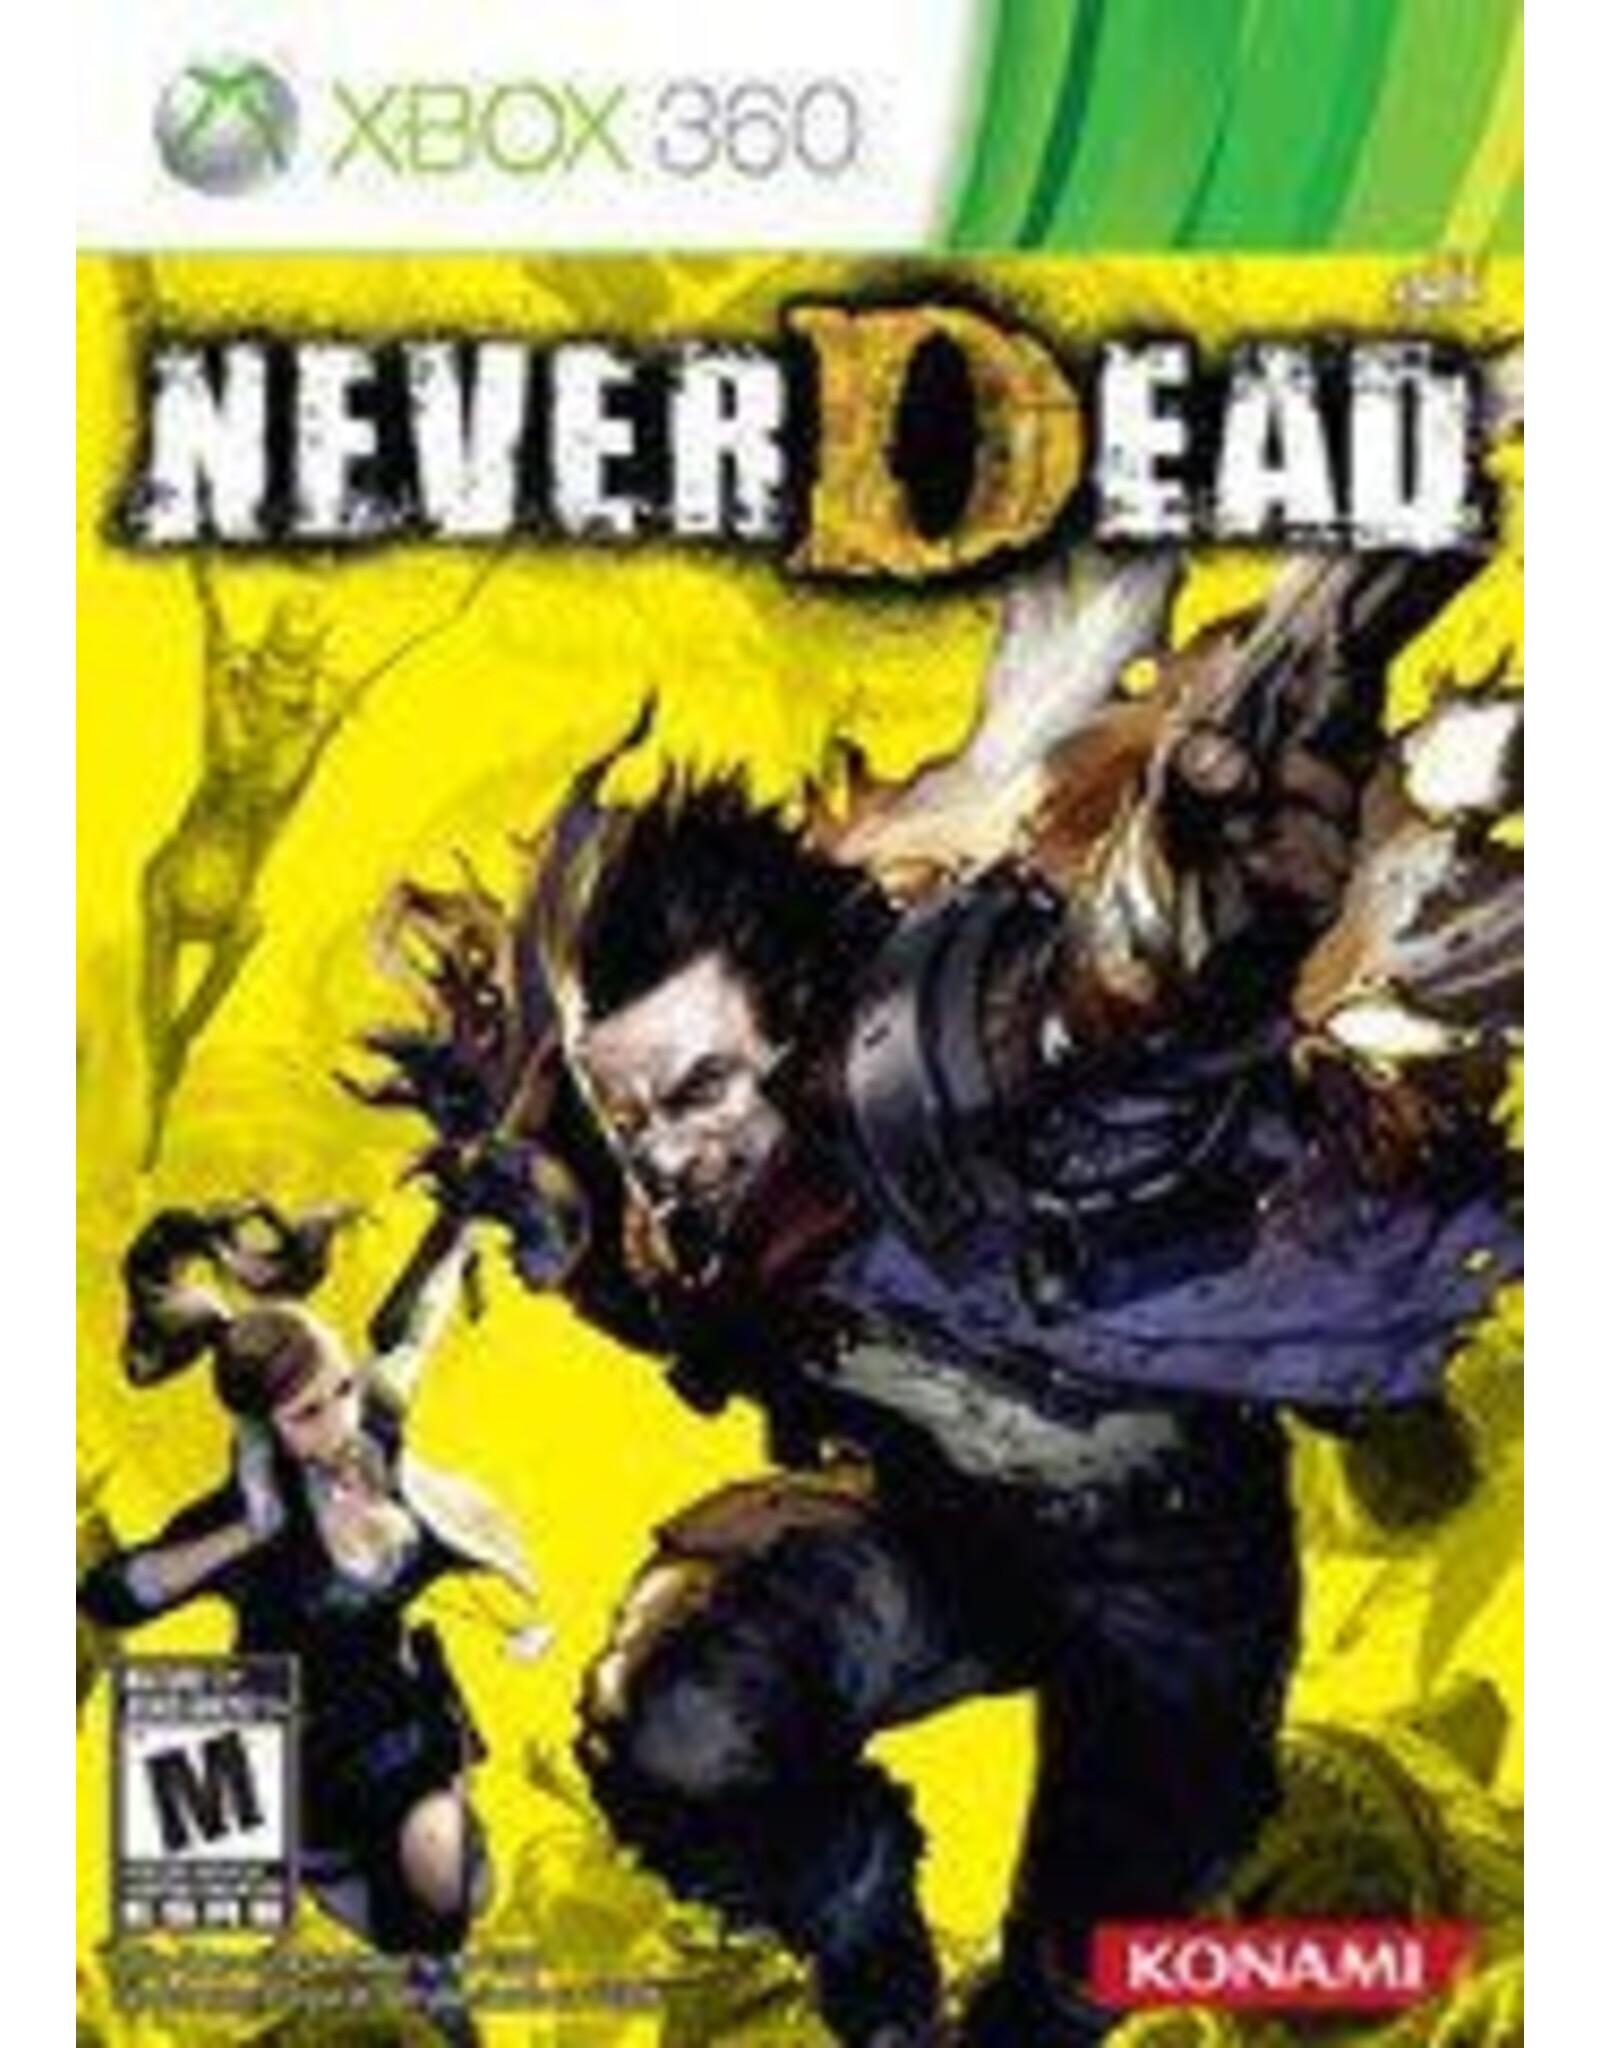 Xbox 360 NeverDead (CiB)